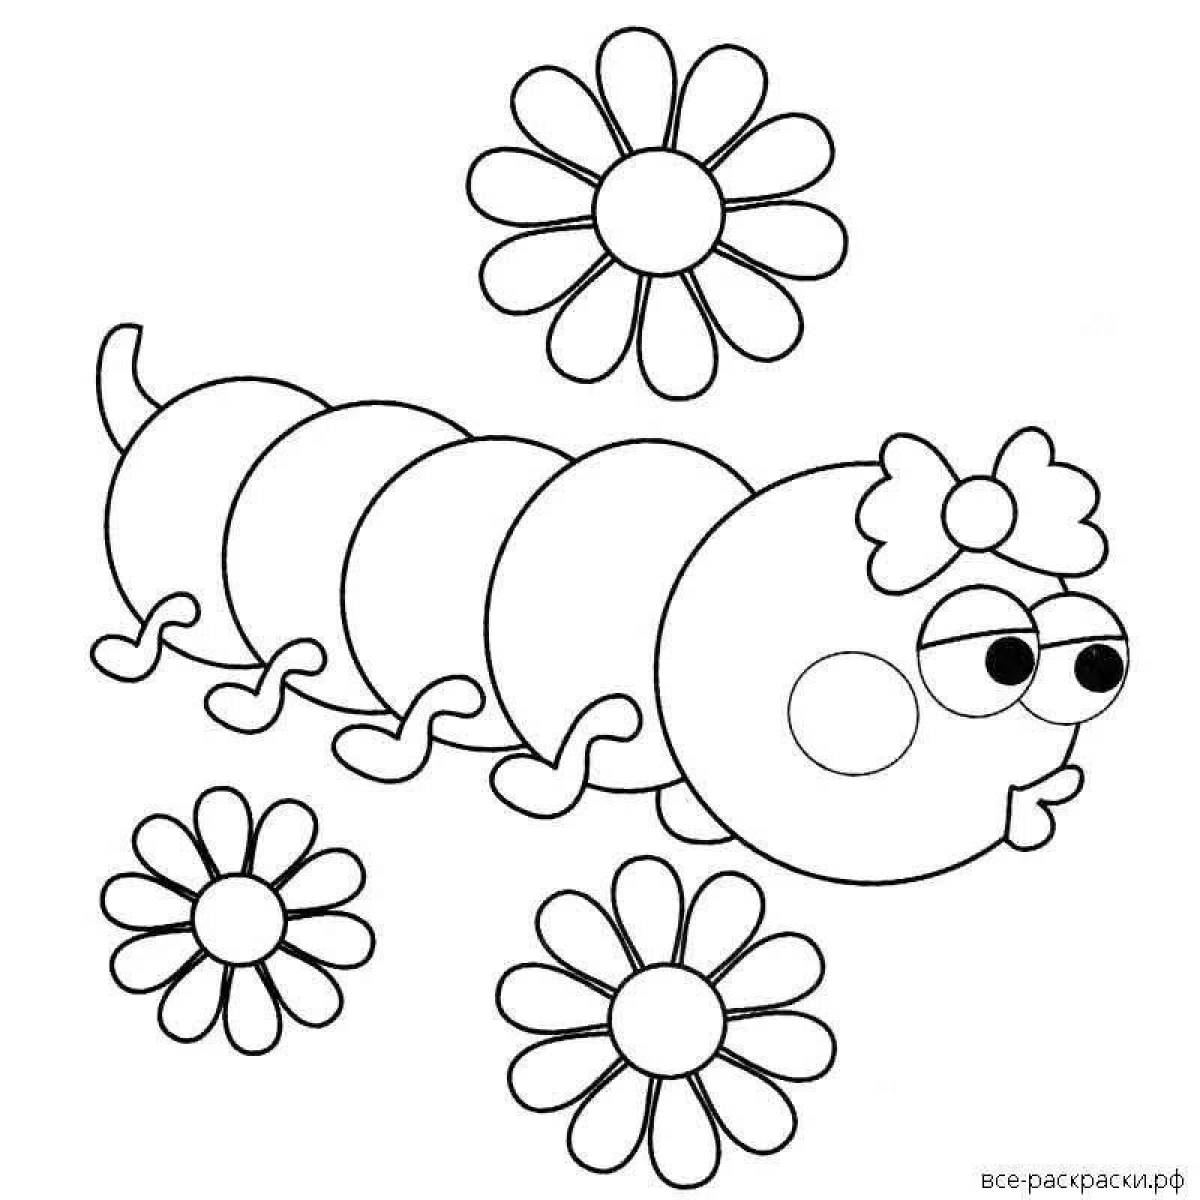 Rampant dog caterpillar coloring page